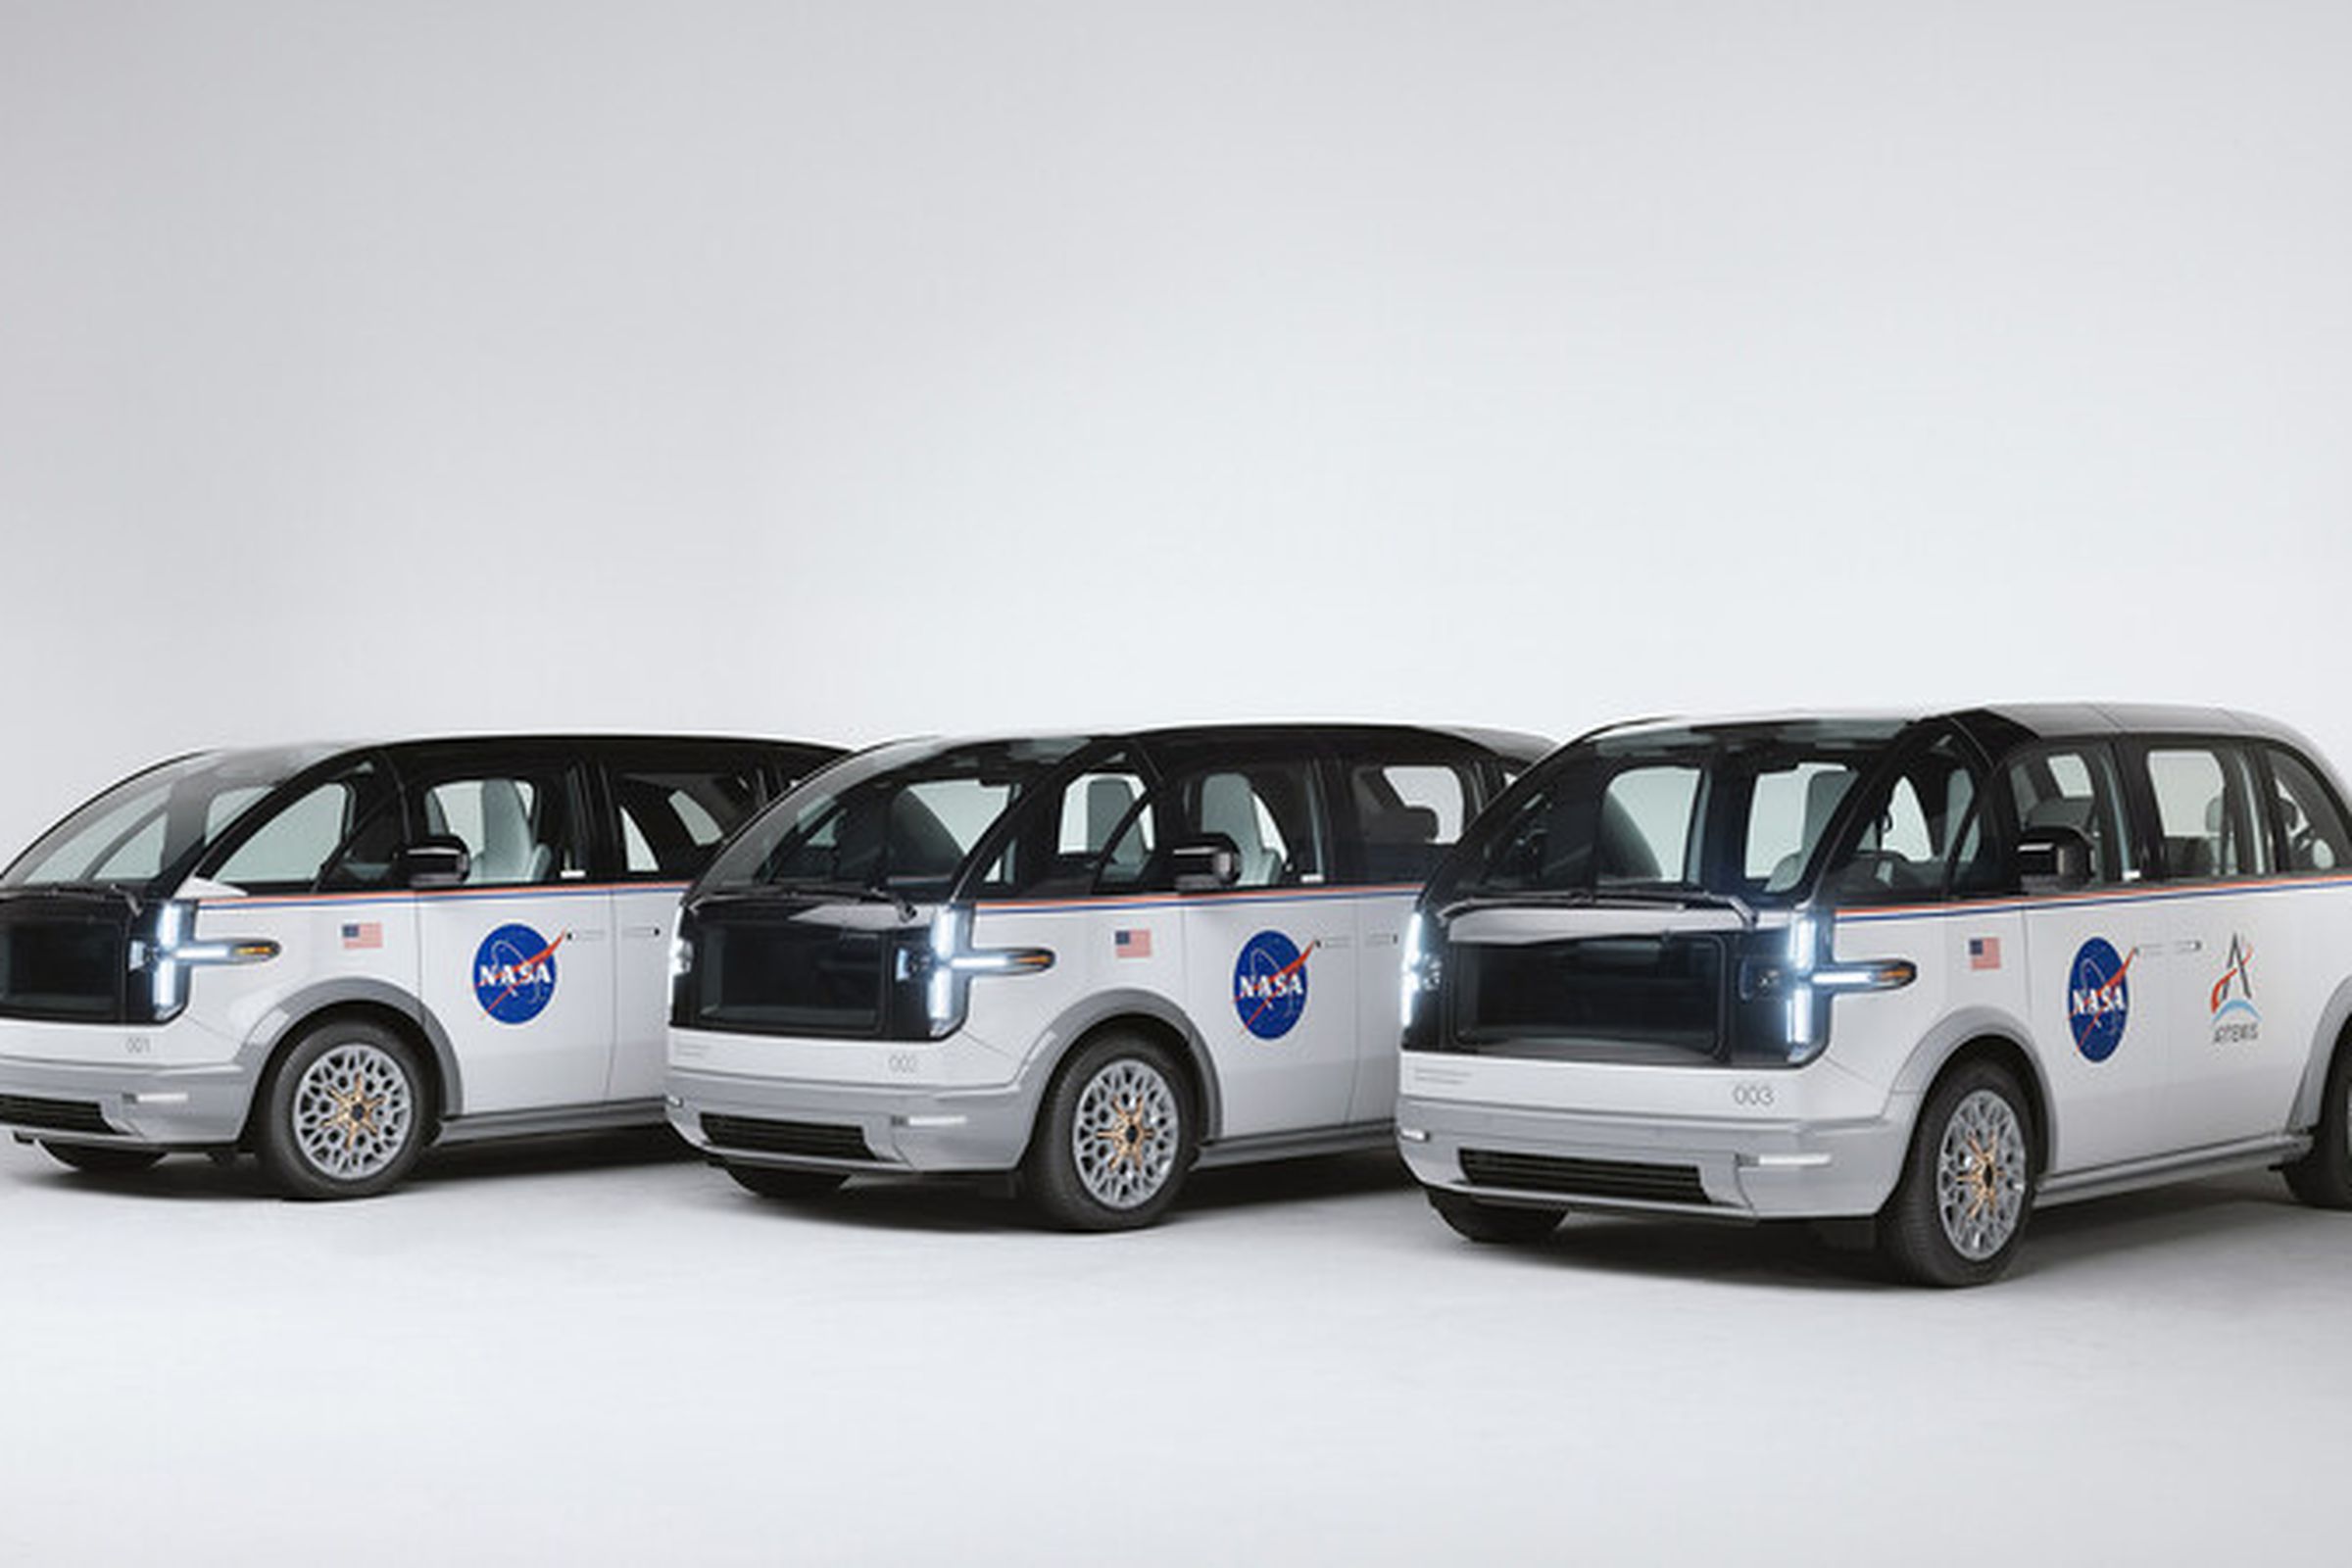 Canoo’s crew transporter vehicles for NASA